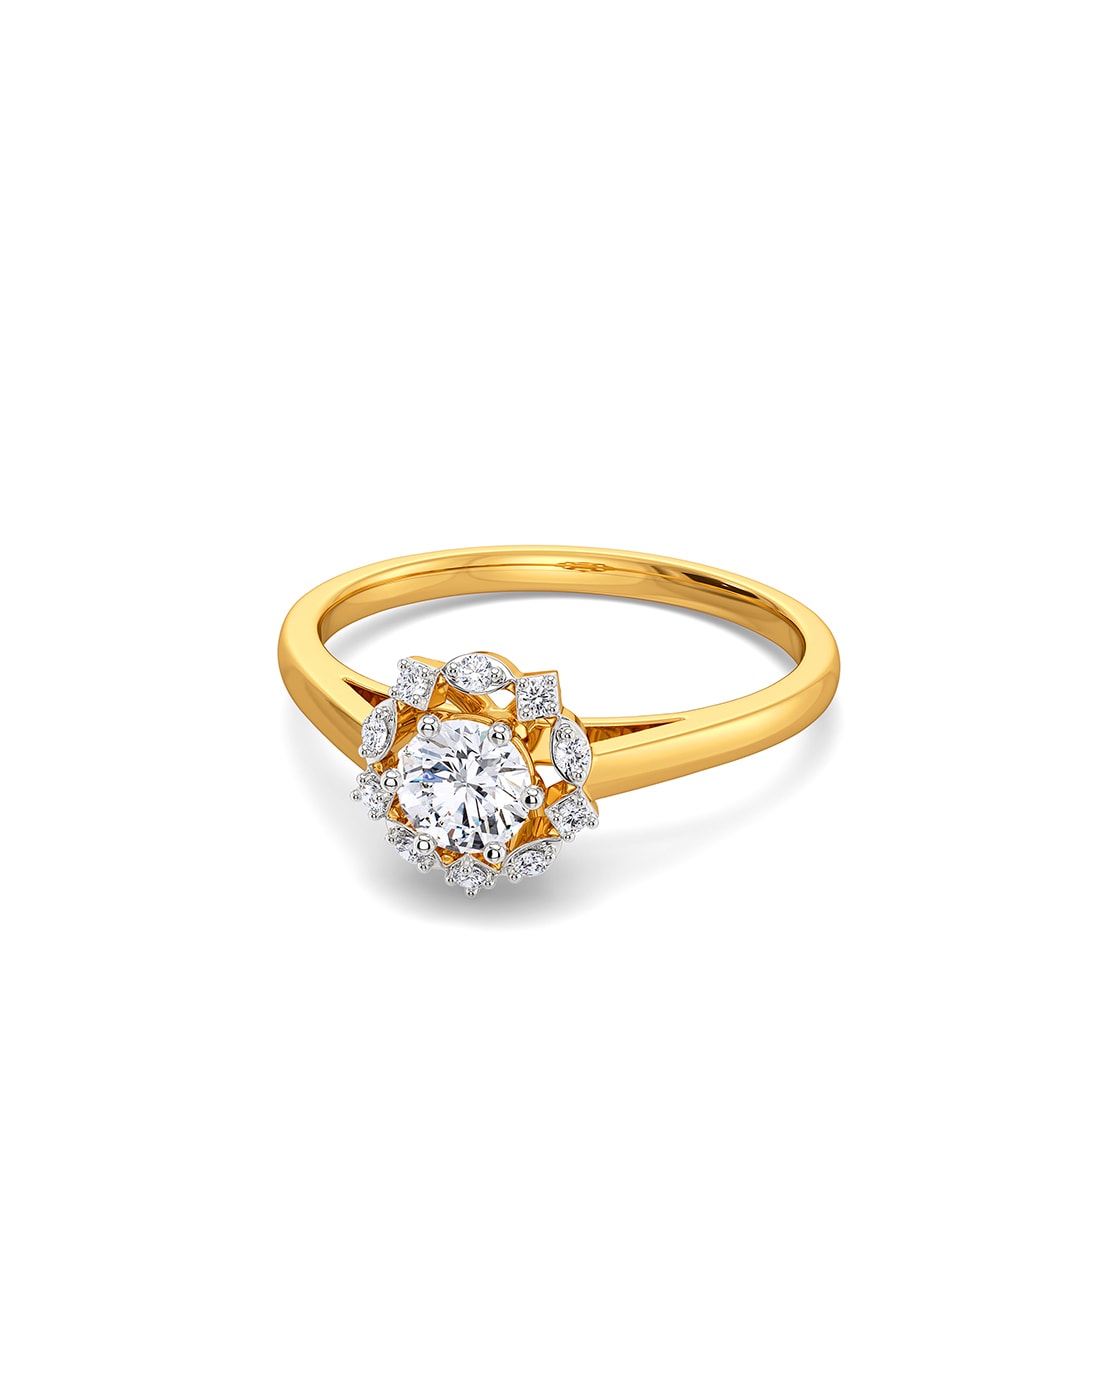 Buy Diamond Gents Ring Online in India | Kasturi Diamond